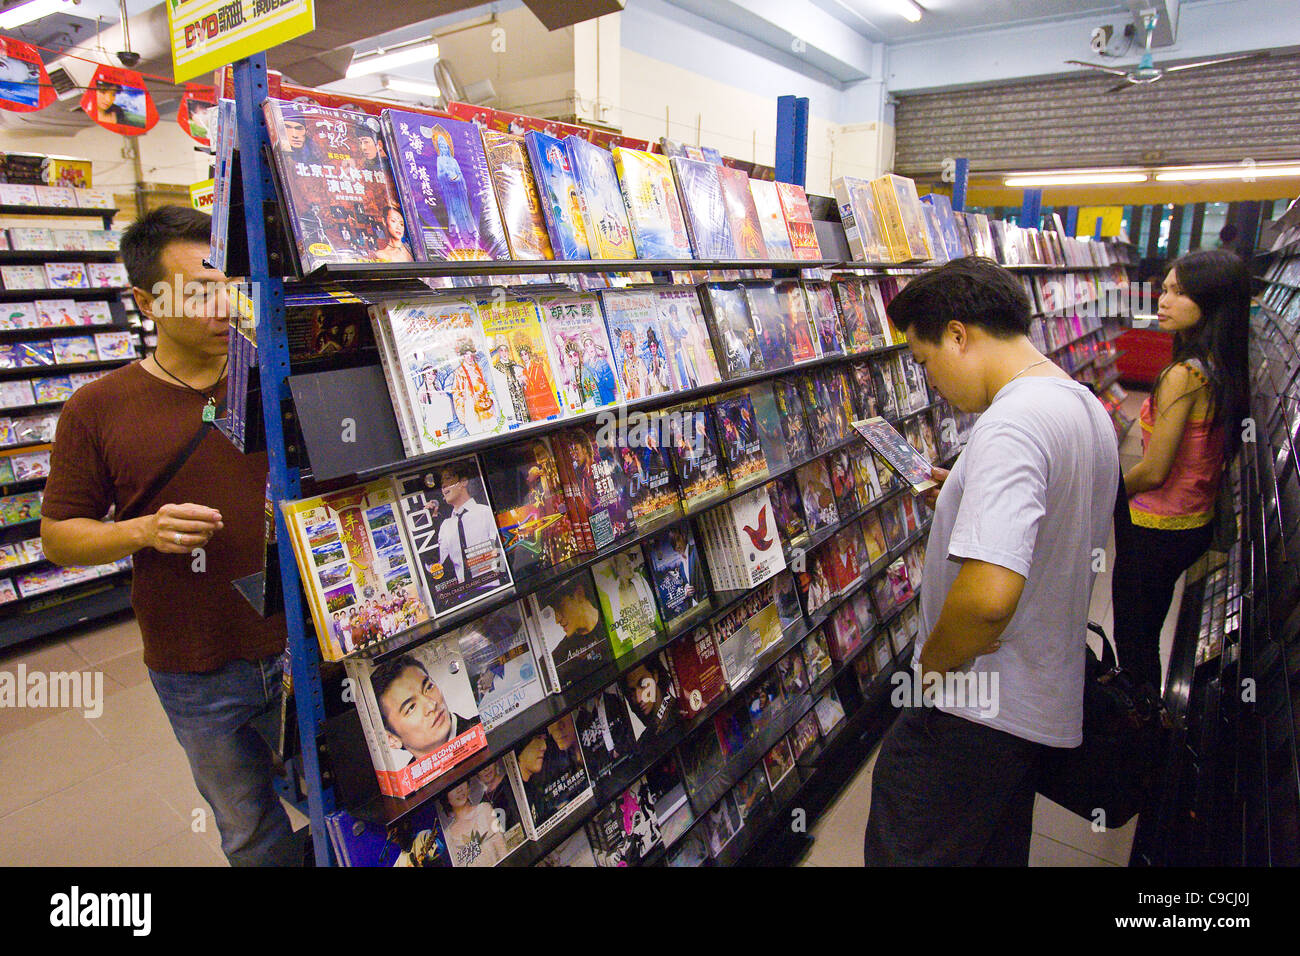 SHA WAN VILLAGE, PAN YU, GUANGDONG PROVINCE, CHINA - Store selling CD and DVD music and movies. Stock Photo